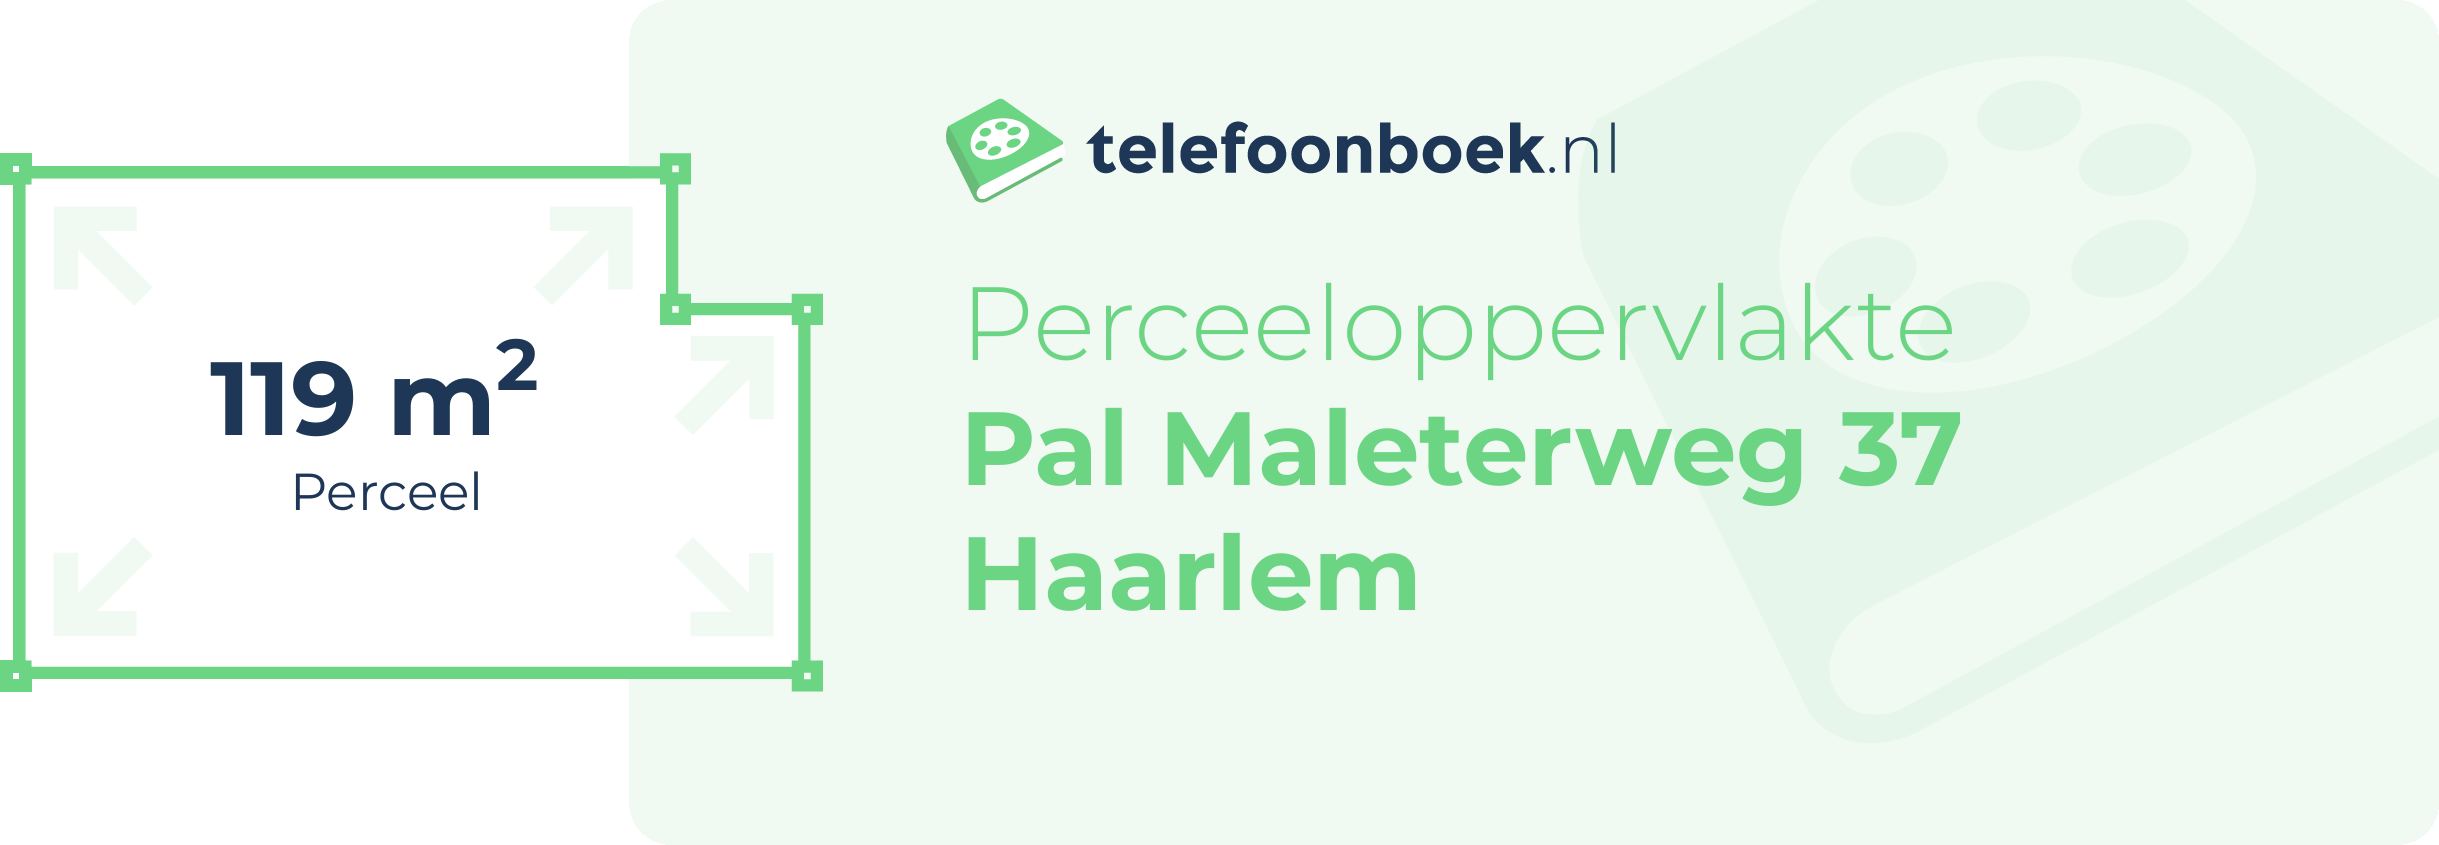 Perceeloppervlakte Pal Maleterweg 37 Haarlem